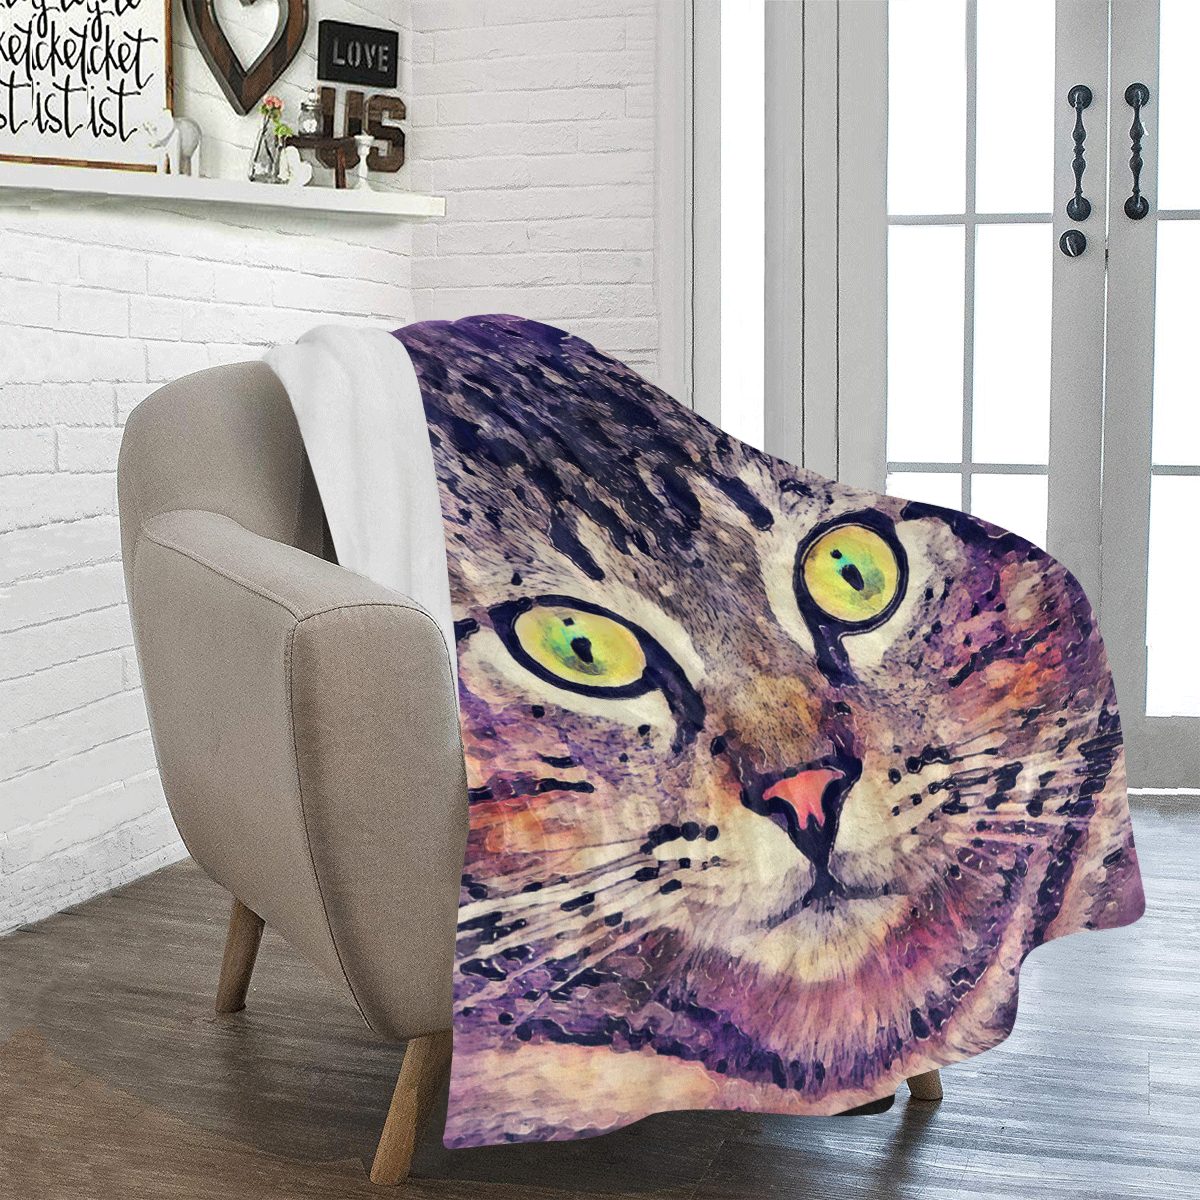 cat Ultra-Soft Micro Fleece Blanket 43''x56''